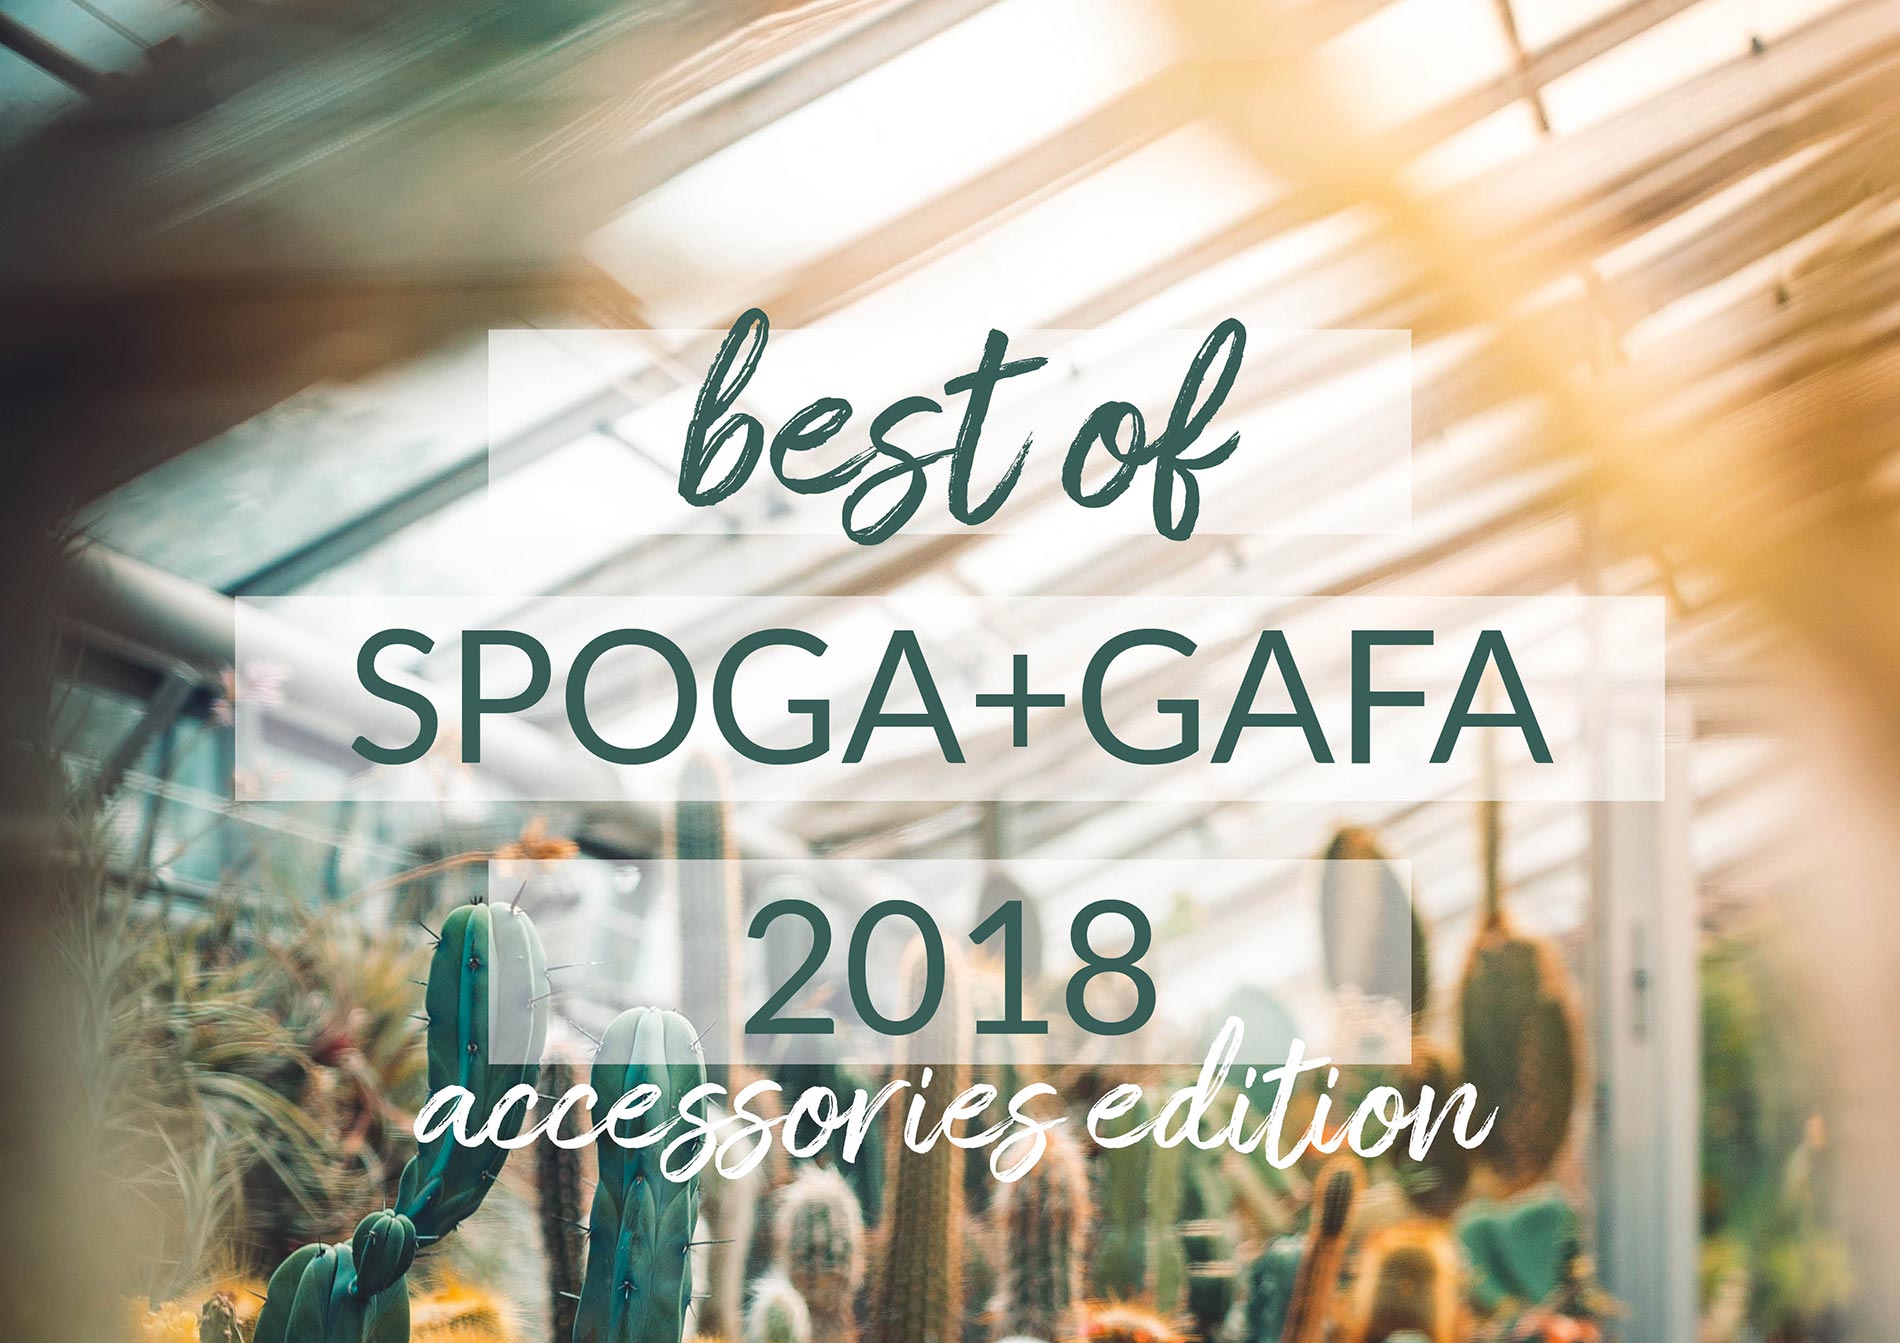 Vasi e giardinaggio - best of Spoga+Gafa 2018